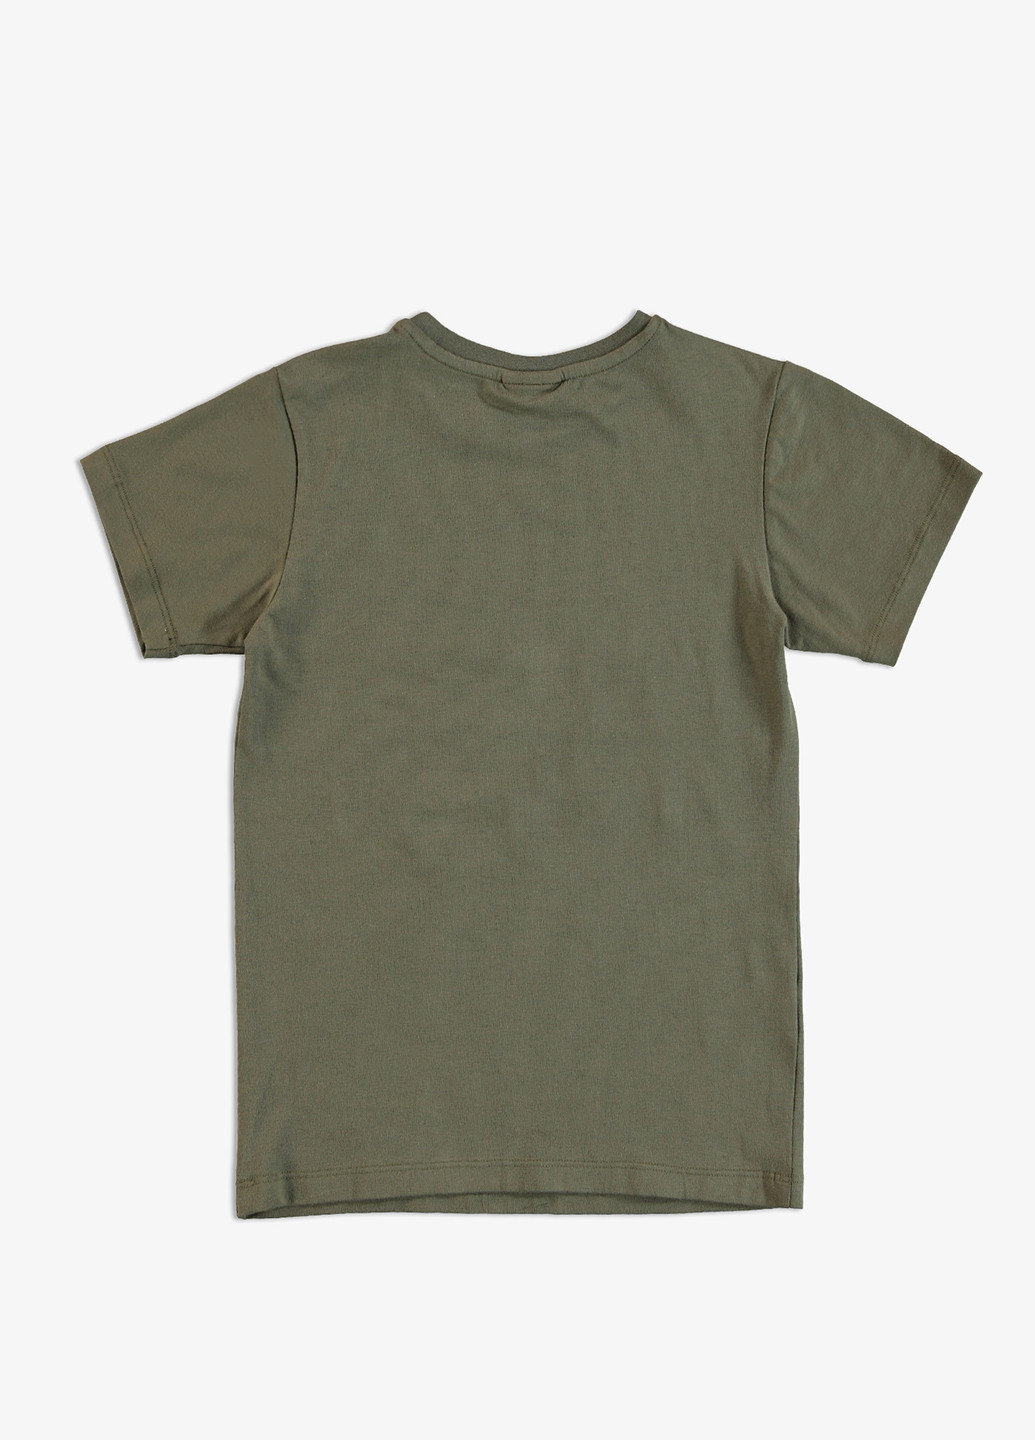 Хаки (оливковая) летняя футболка Lacoste